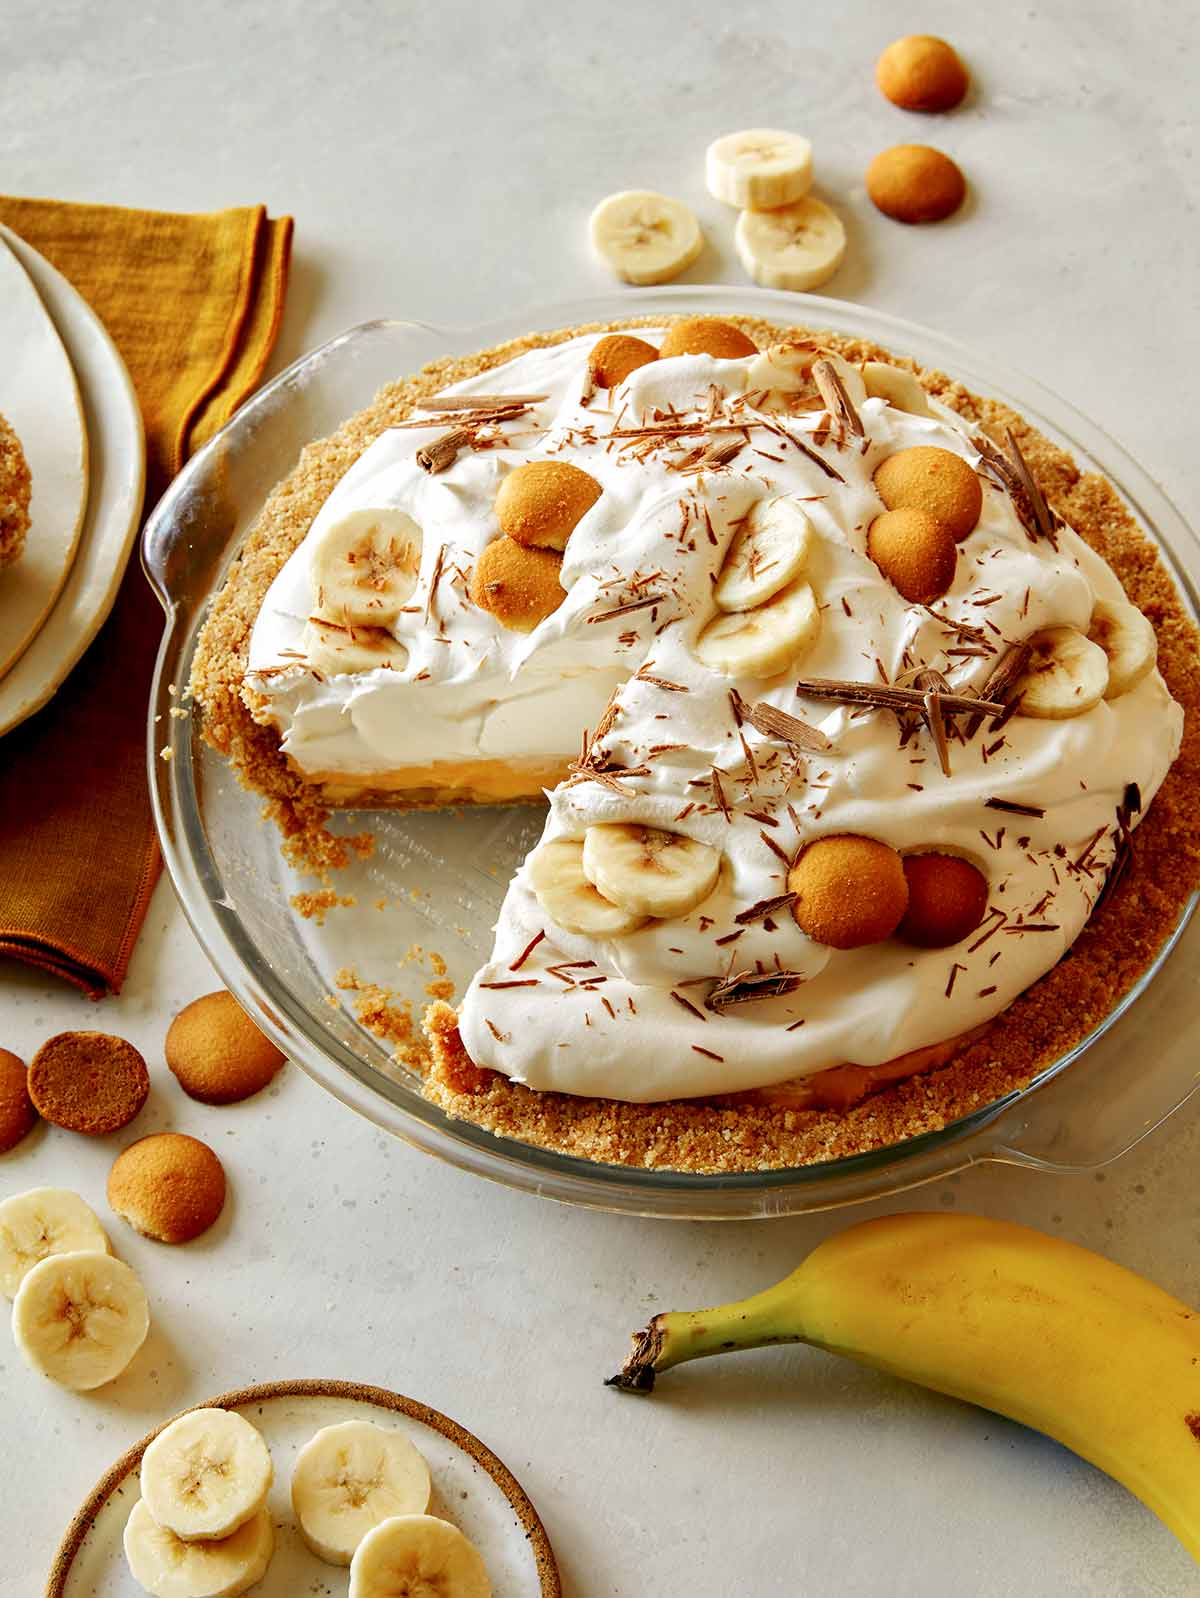 Banana cream pie recipe made with nilla waffers on the side and a banana. 